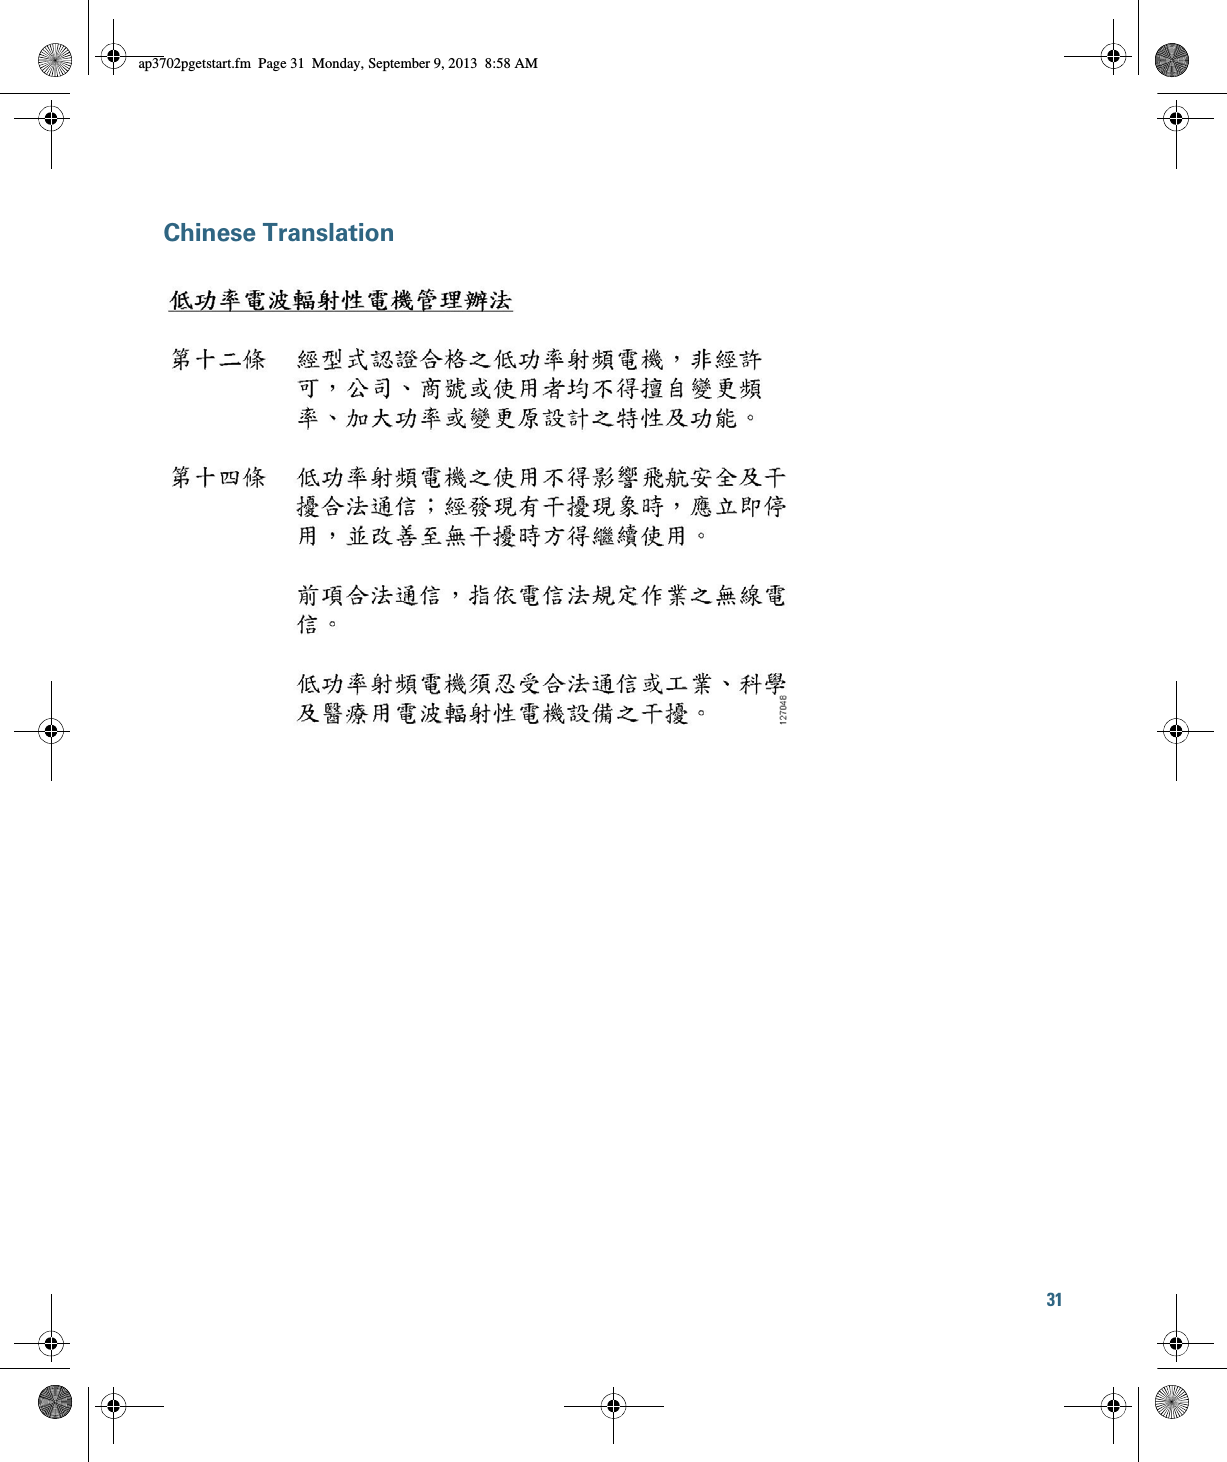 31 Chinese Translationap3702pgetstart.fm  Page 31  Monday, September 9, 2013  8:58 AM